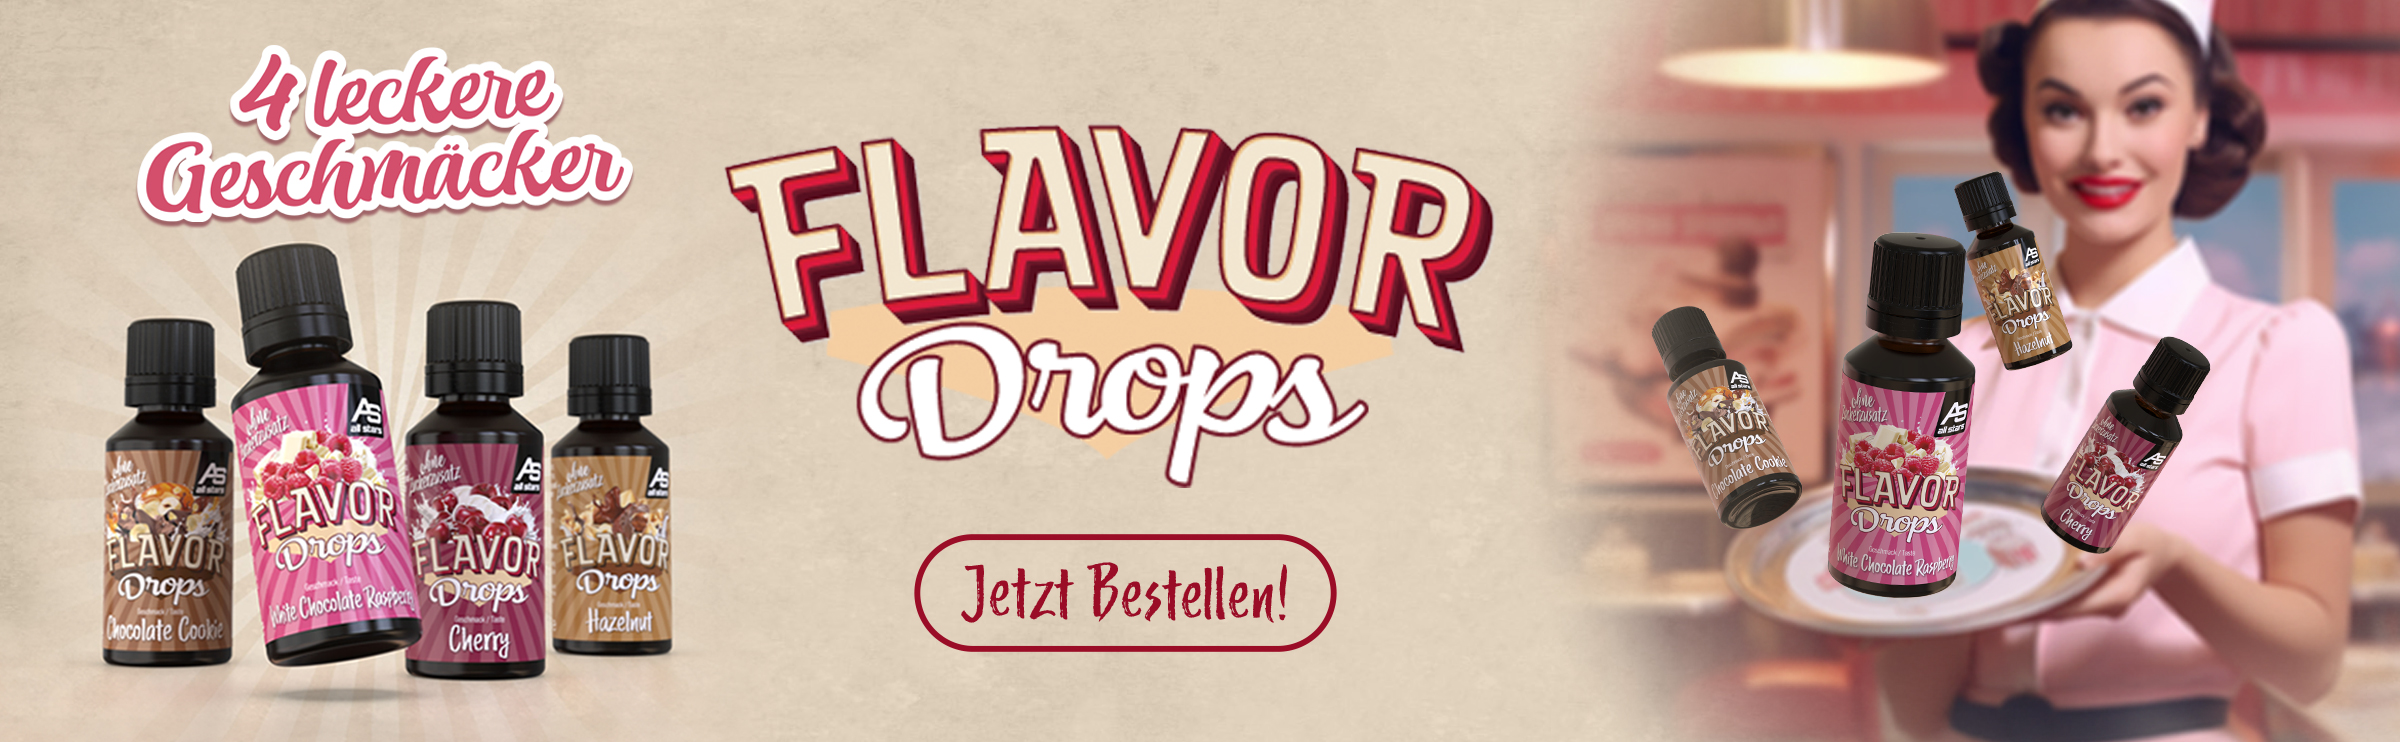 Flavor-Drops-Bottom-Image